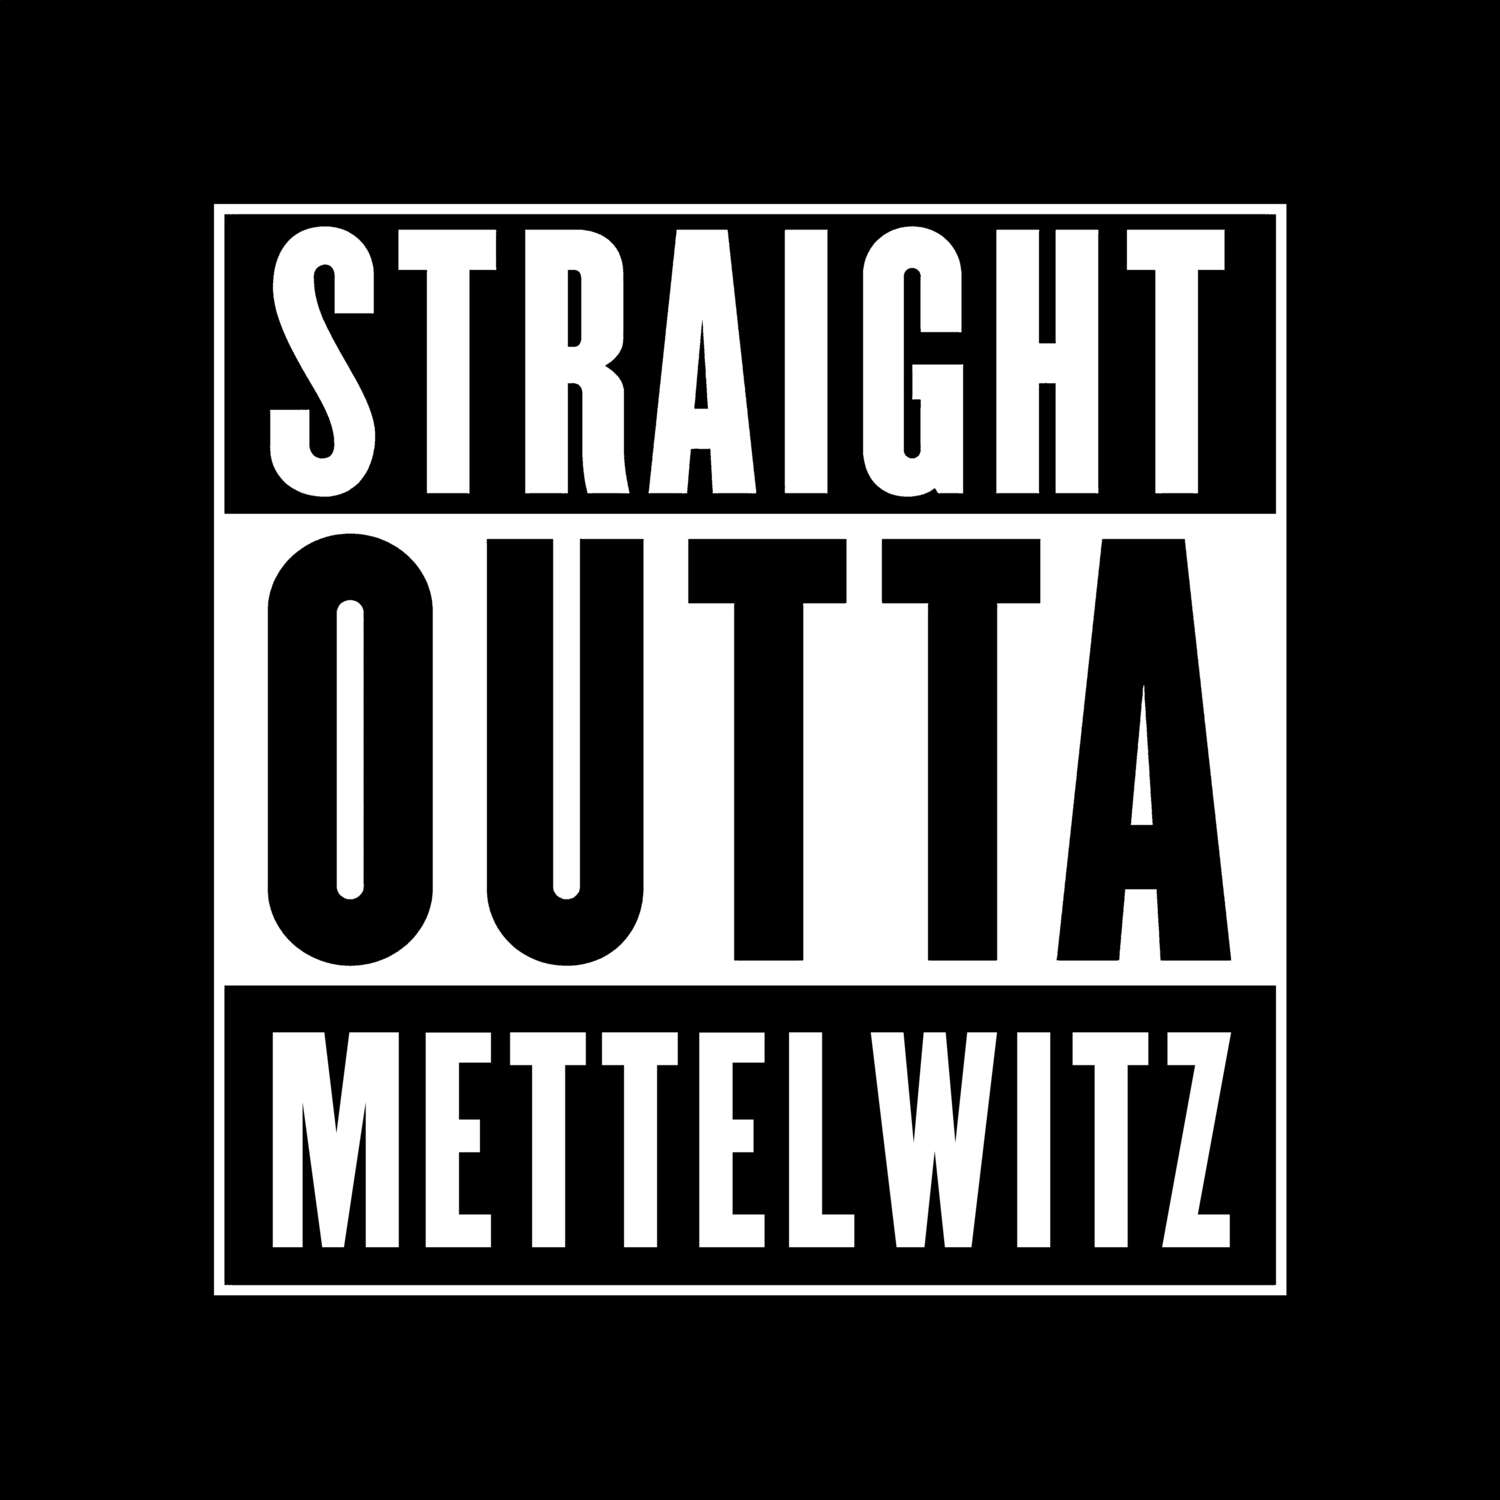 Mettelwitz T-Shirt »Straight Outta«